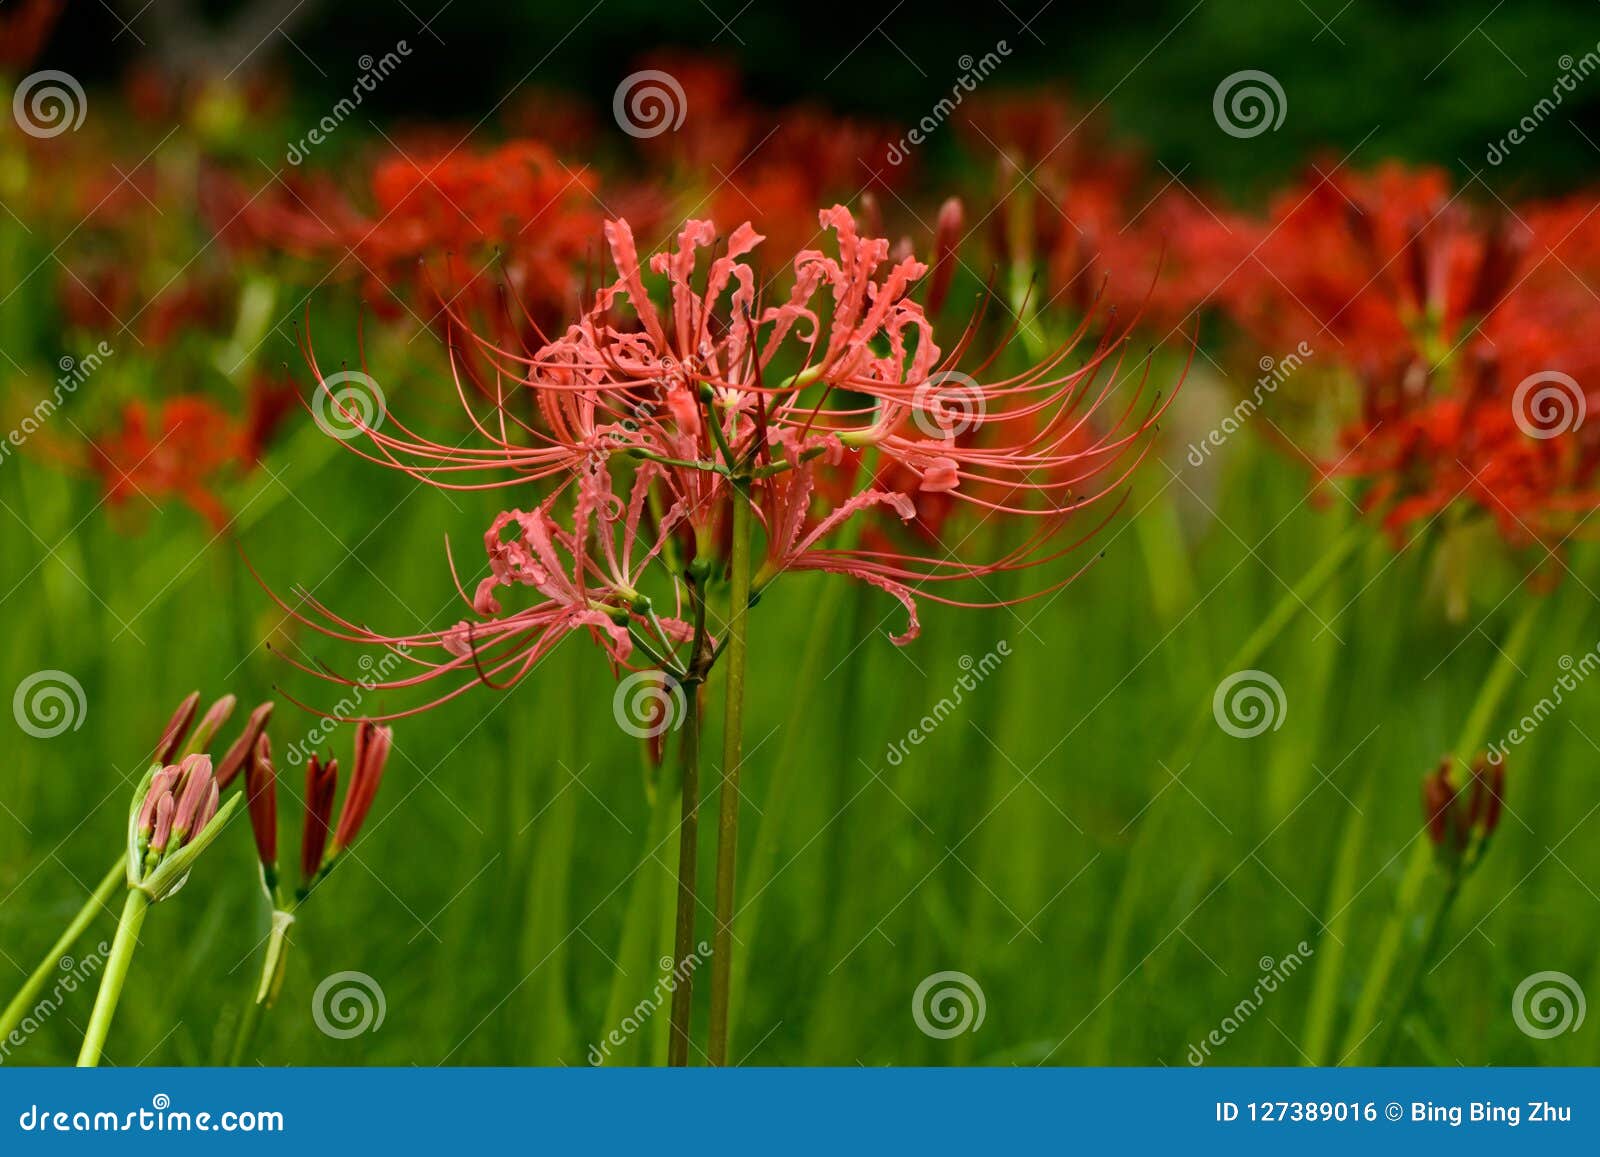 bloomimg red lycoris radiata